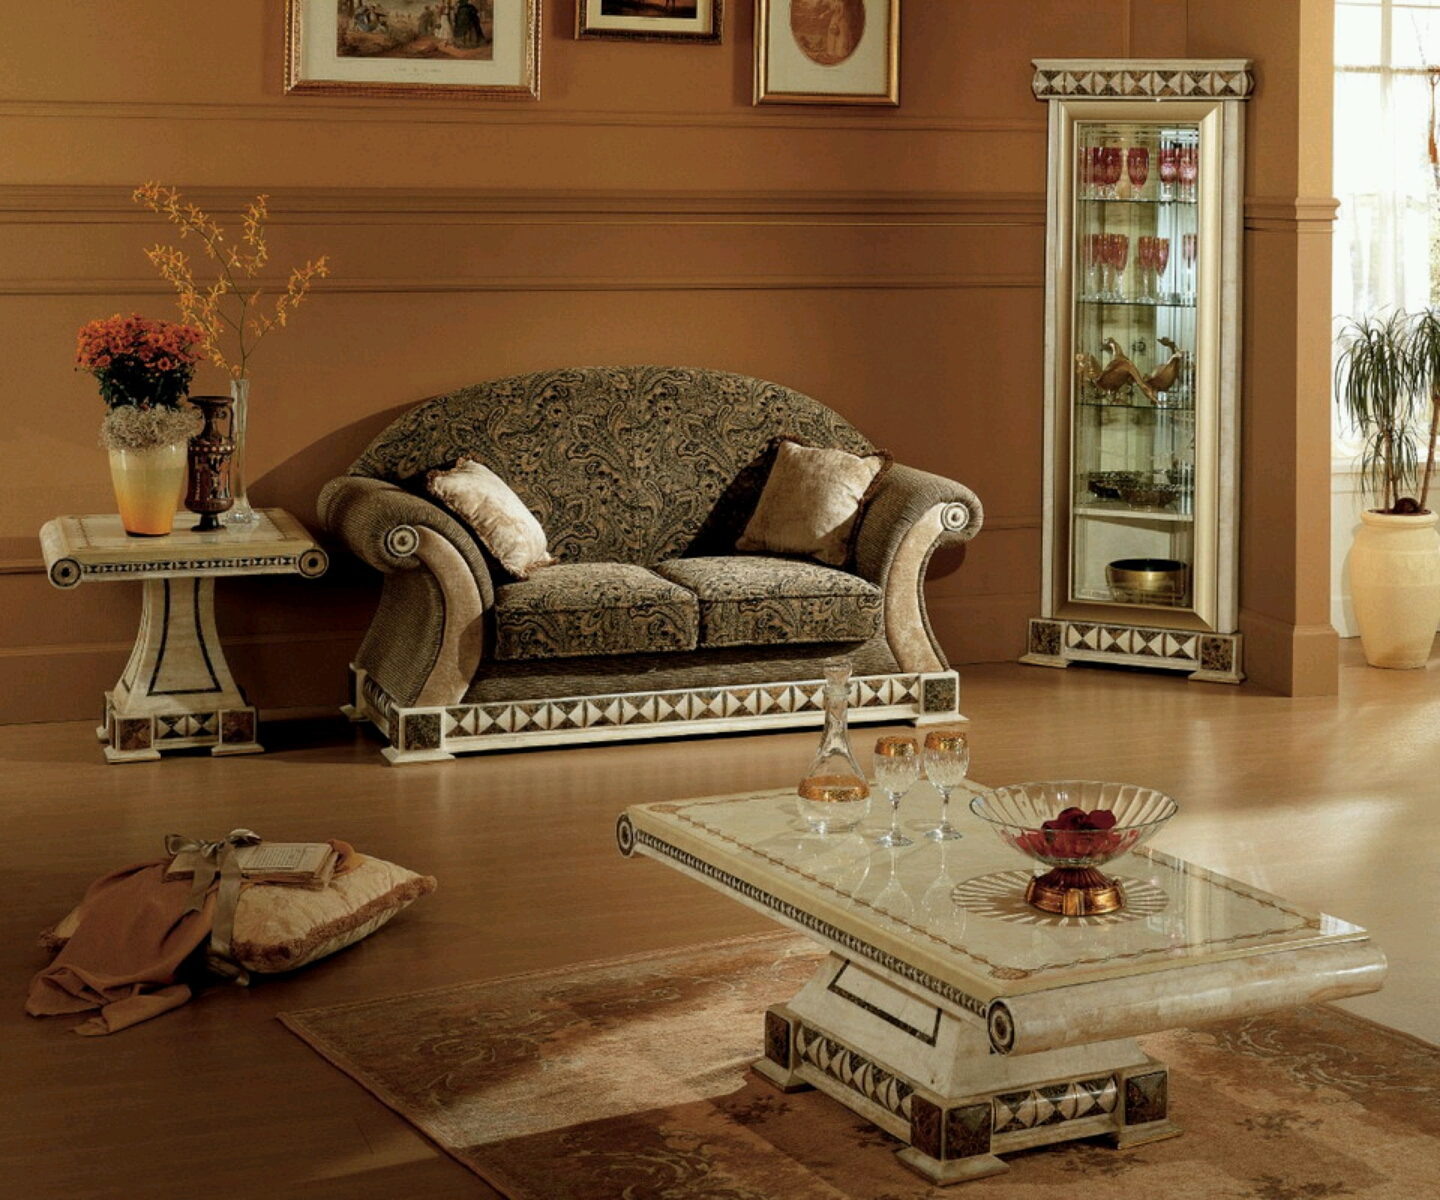 Luxury homes interior decoration living room designs ideas. | New home ...